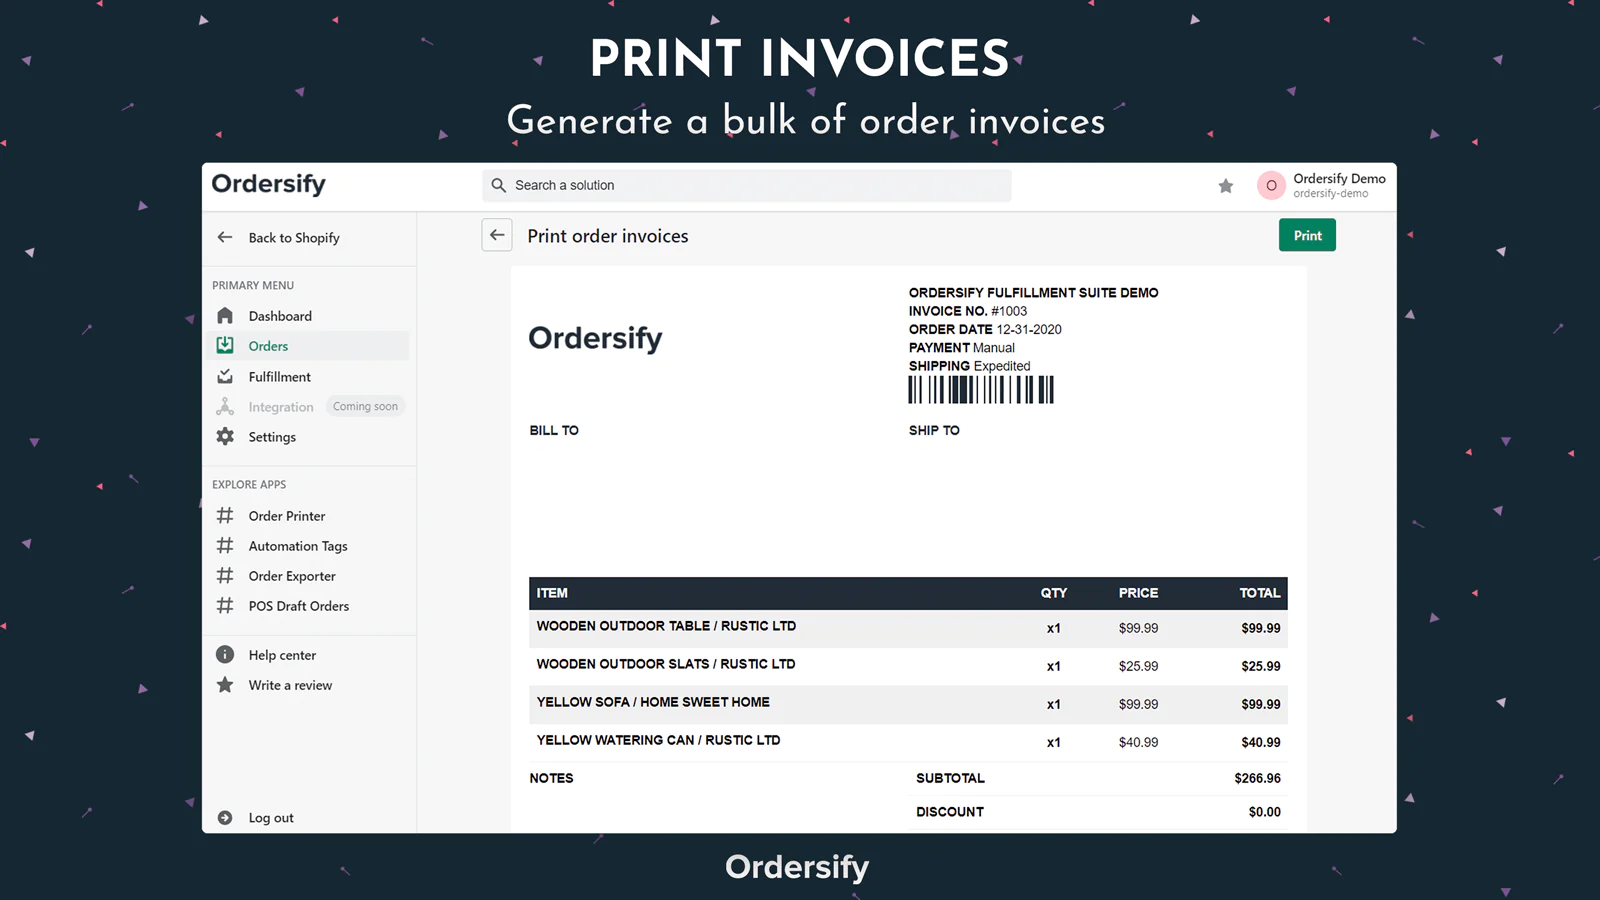 Imprimir facturas - Generar un lote de facturas de pedidos